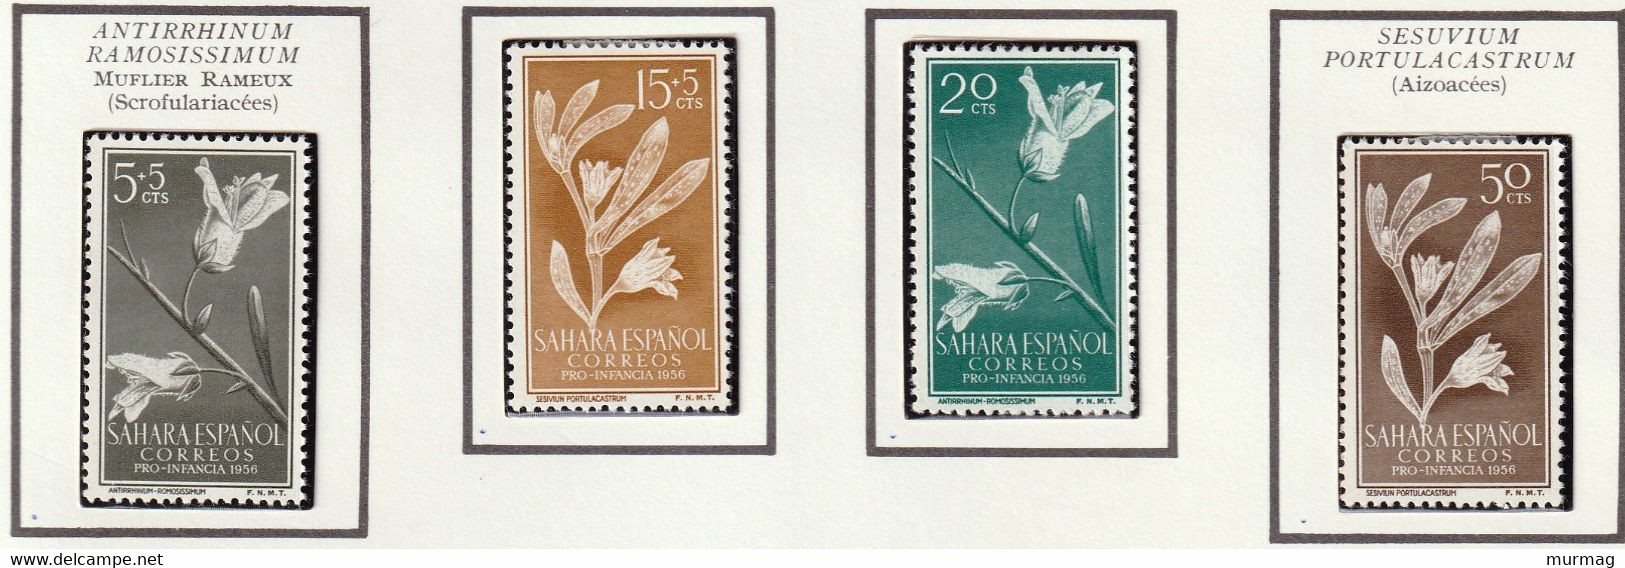 SAHARA ESPAGNOL - Fleurs, Mufliers - Y&T N° 113-116 - 1956 - MNH - Sahara Español